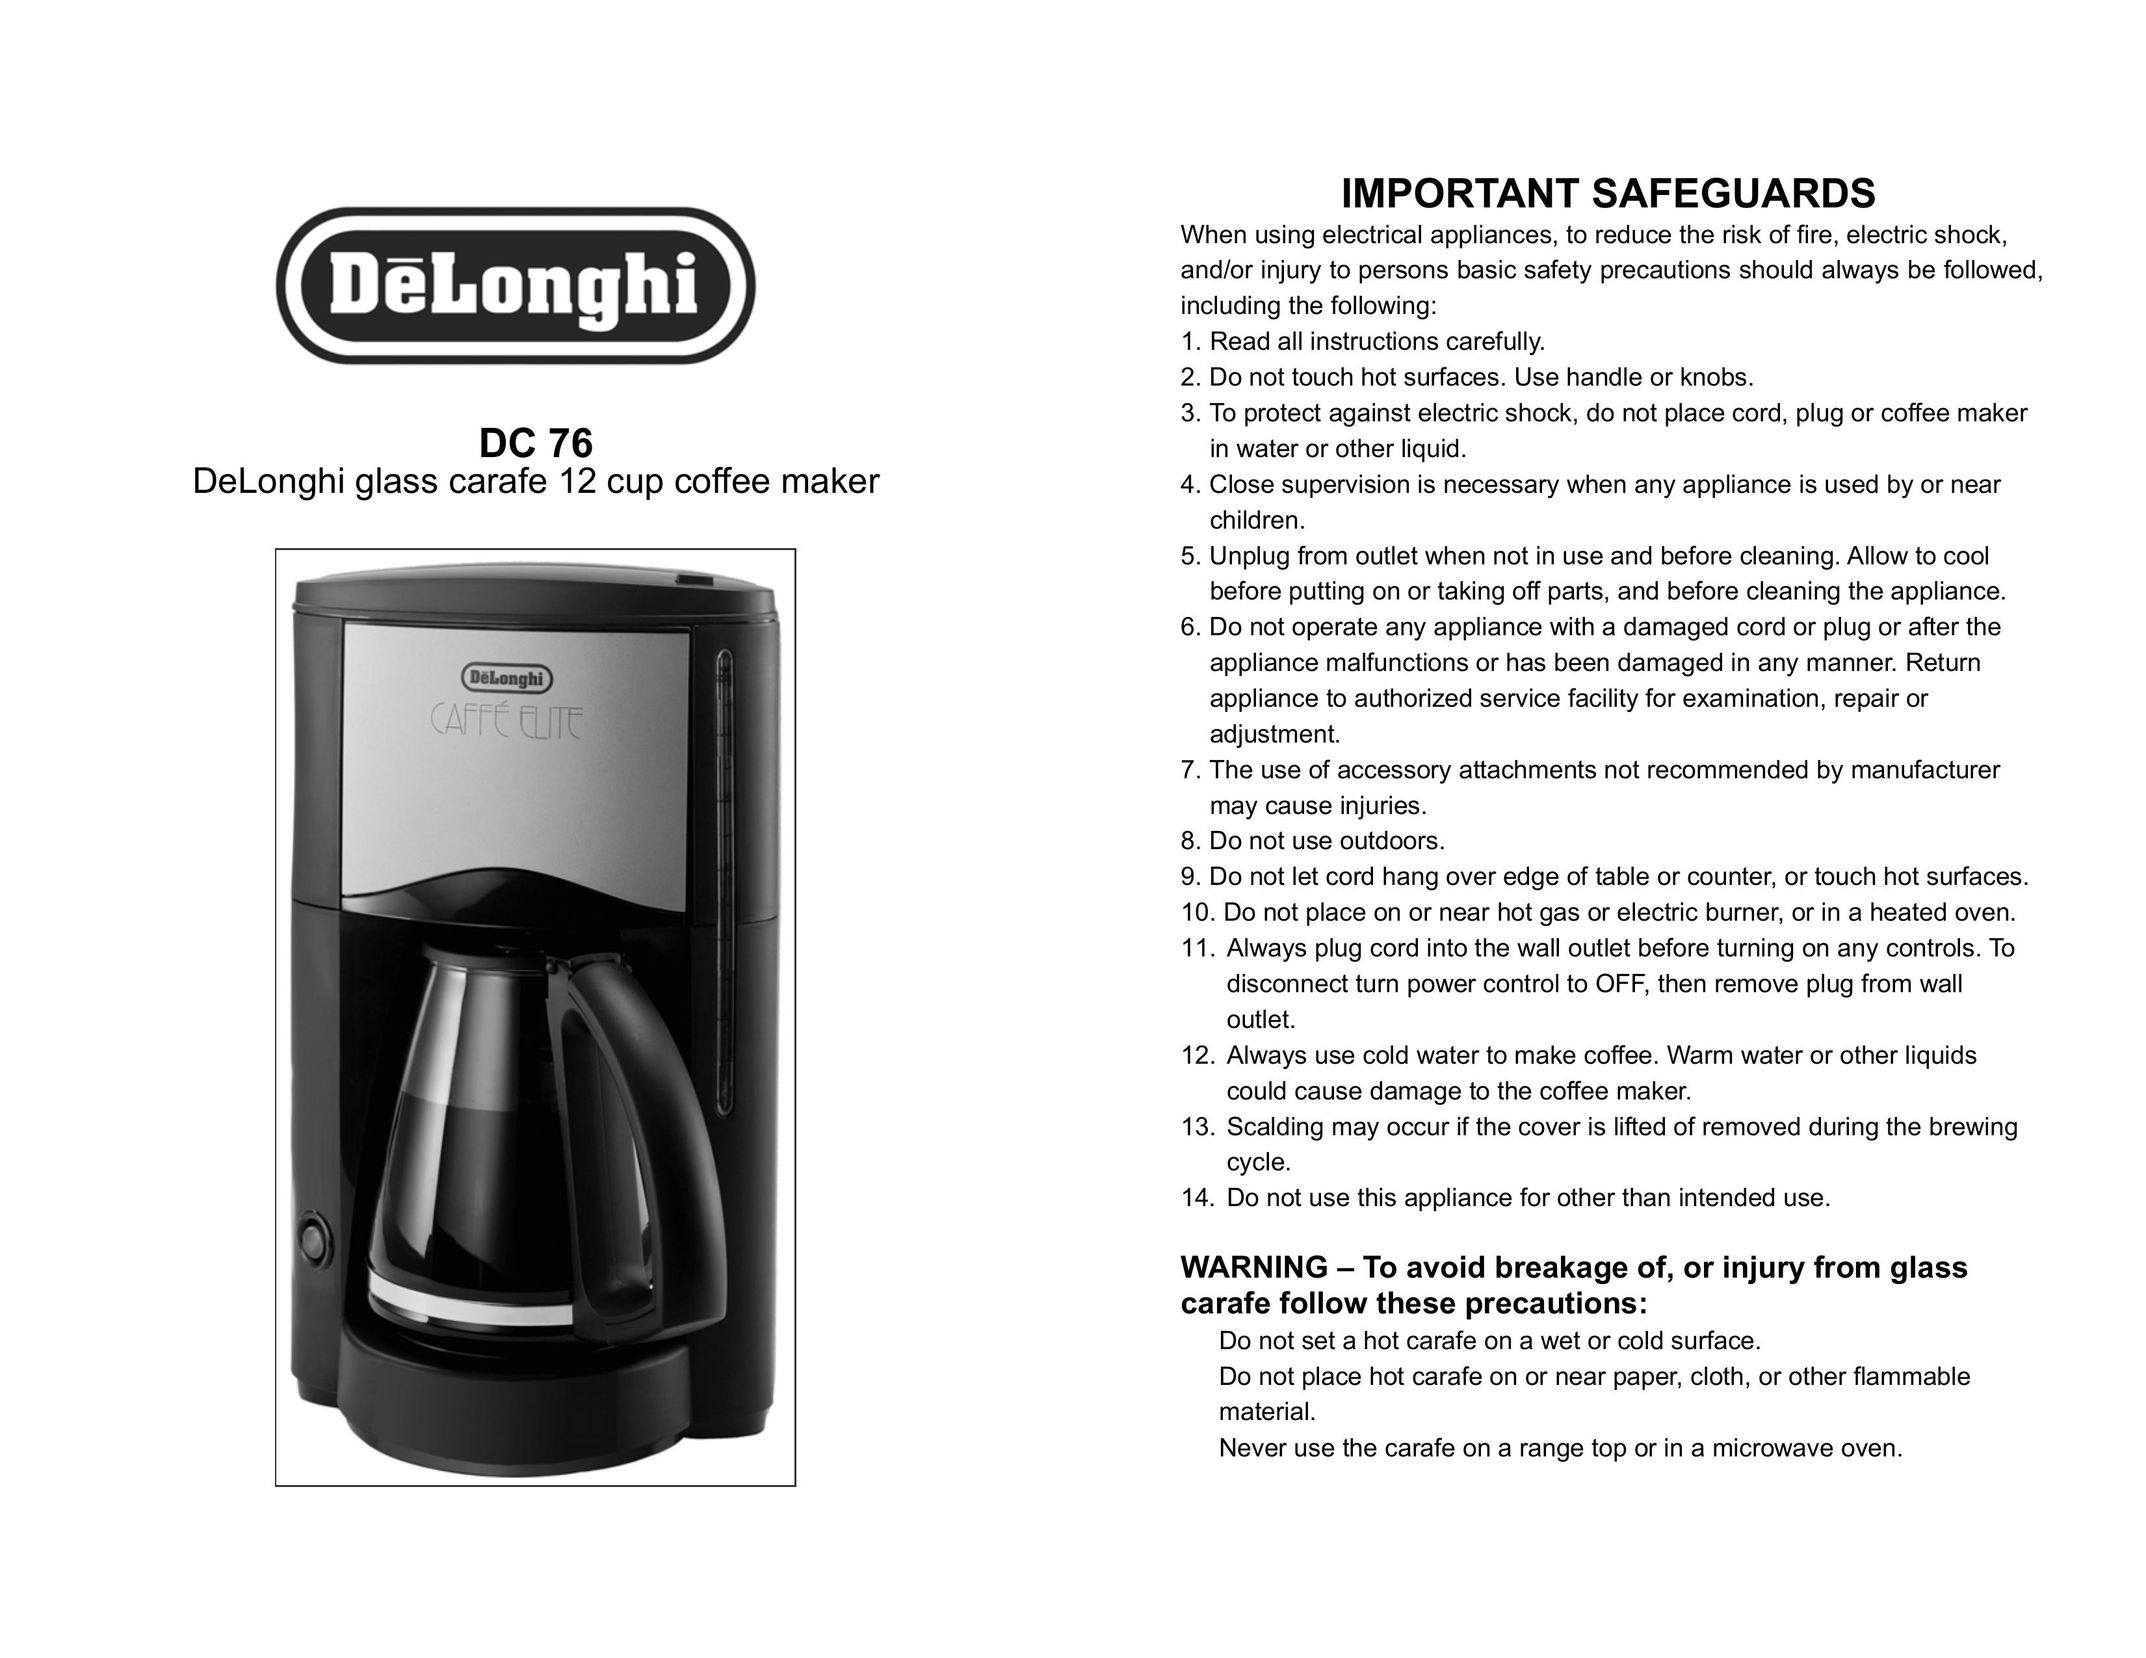 DeLonghi DC 76 Coffeemaker User Manual